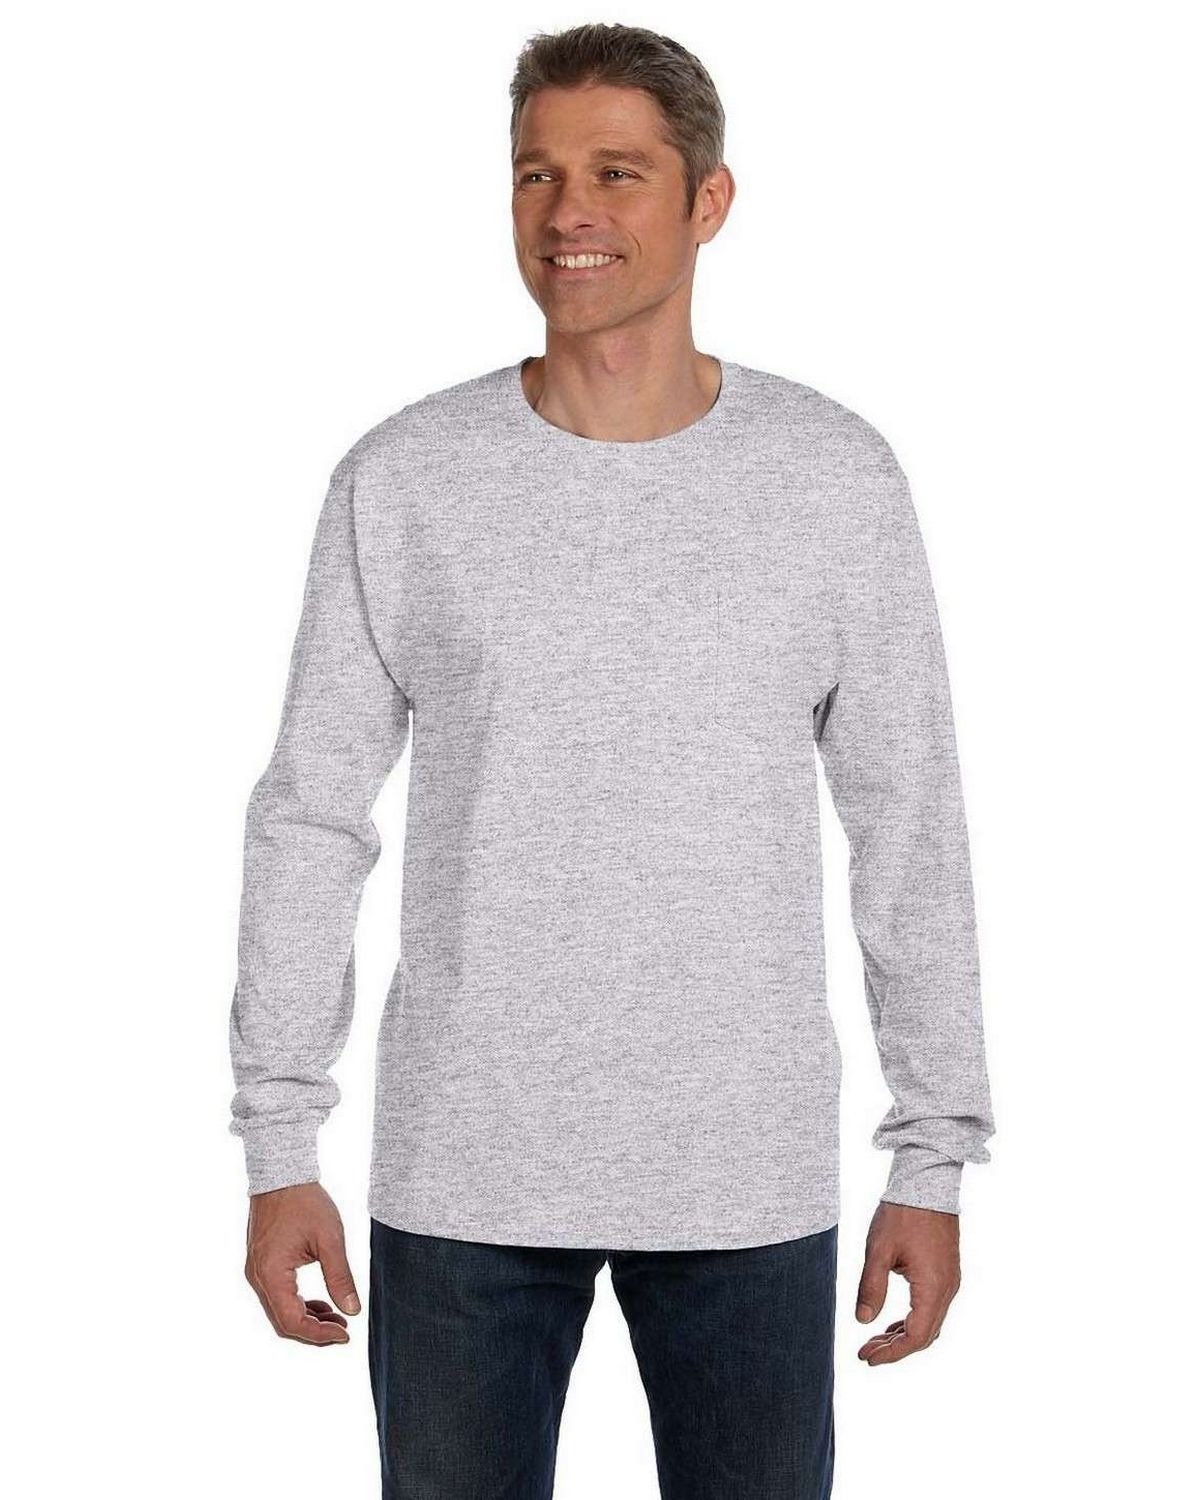 Hanes 5596 Tagless Long Sleeve Pocket T Shirt - ApparelnBags.com